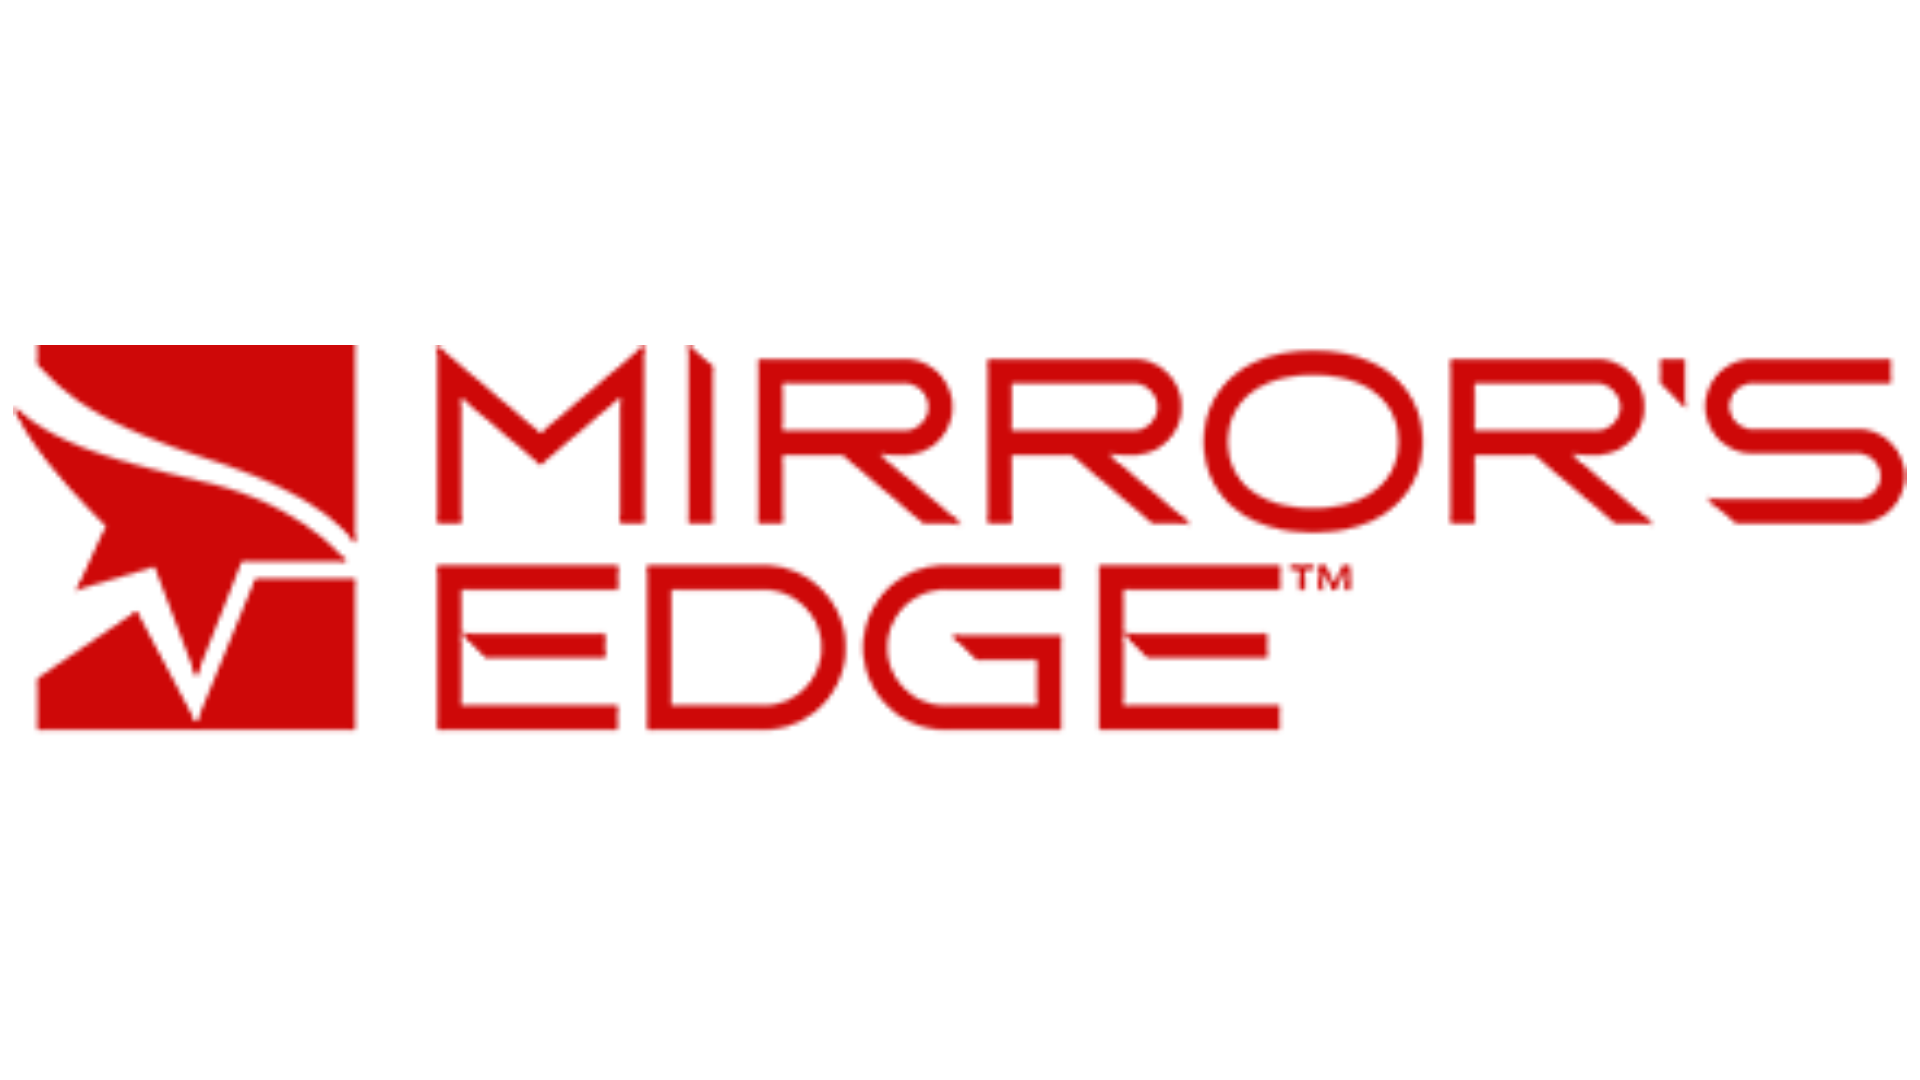 Mirror's Edge Logo